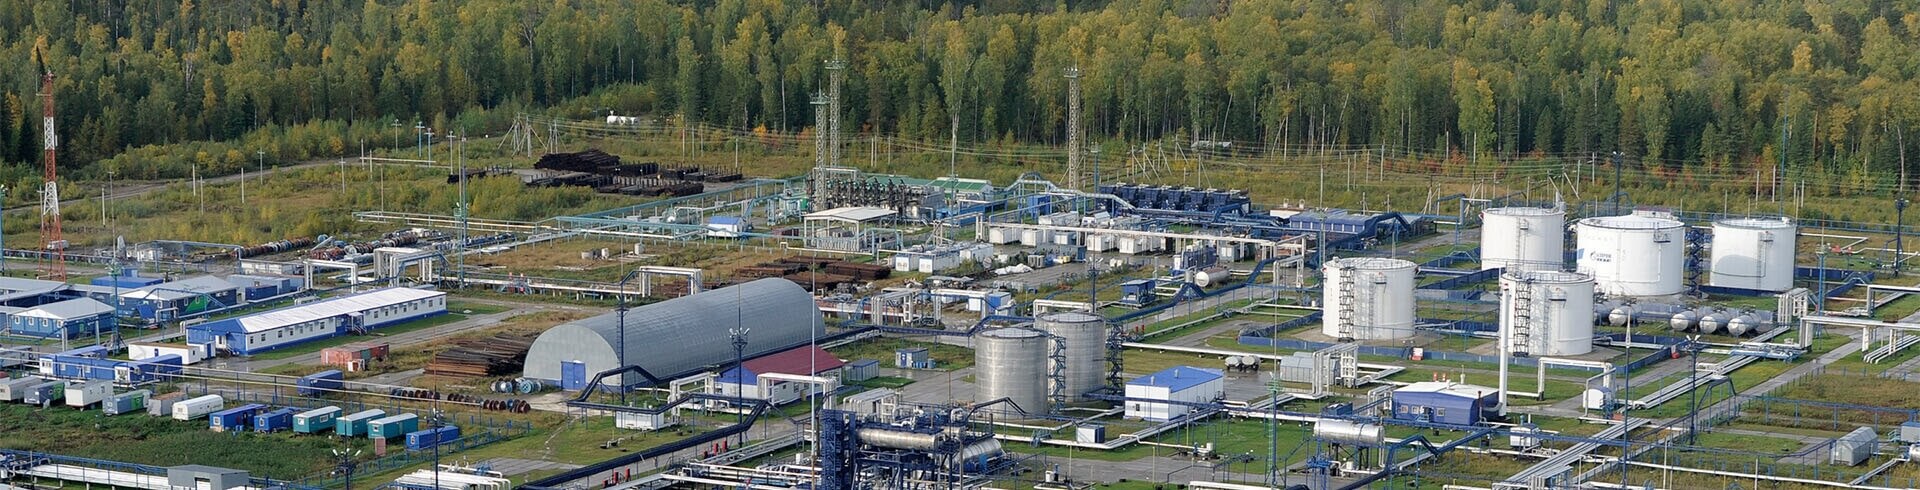 Cummins MWM 5MW 10MW natural gas oilfield gas engine generator power station ETTES POWER